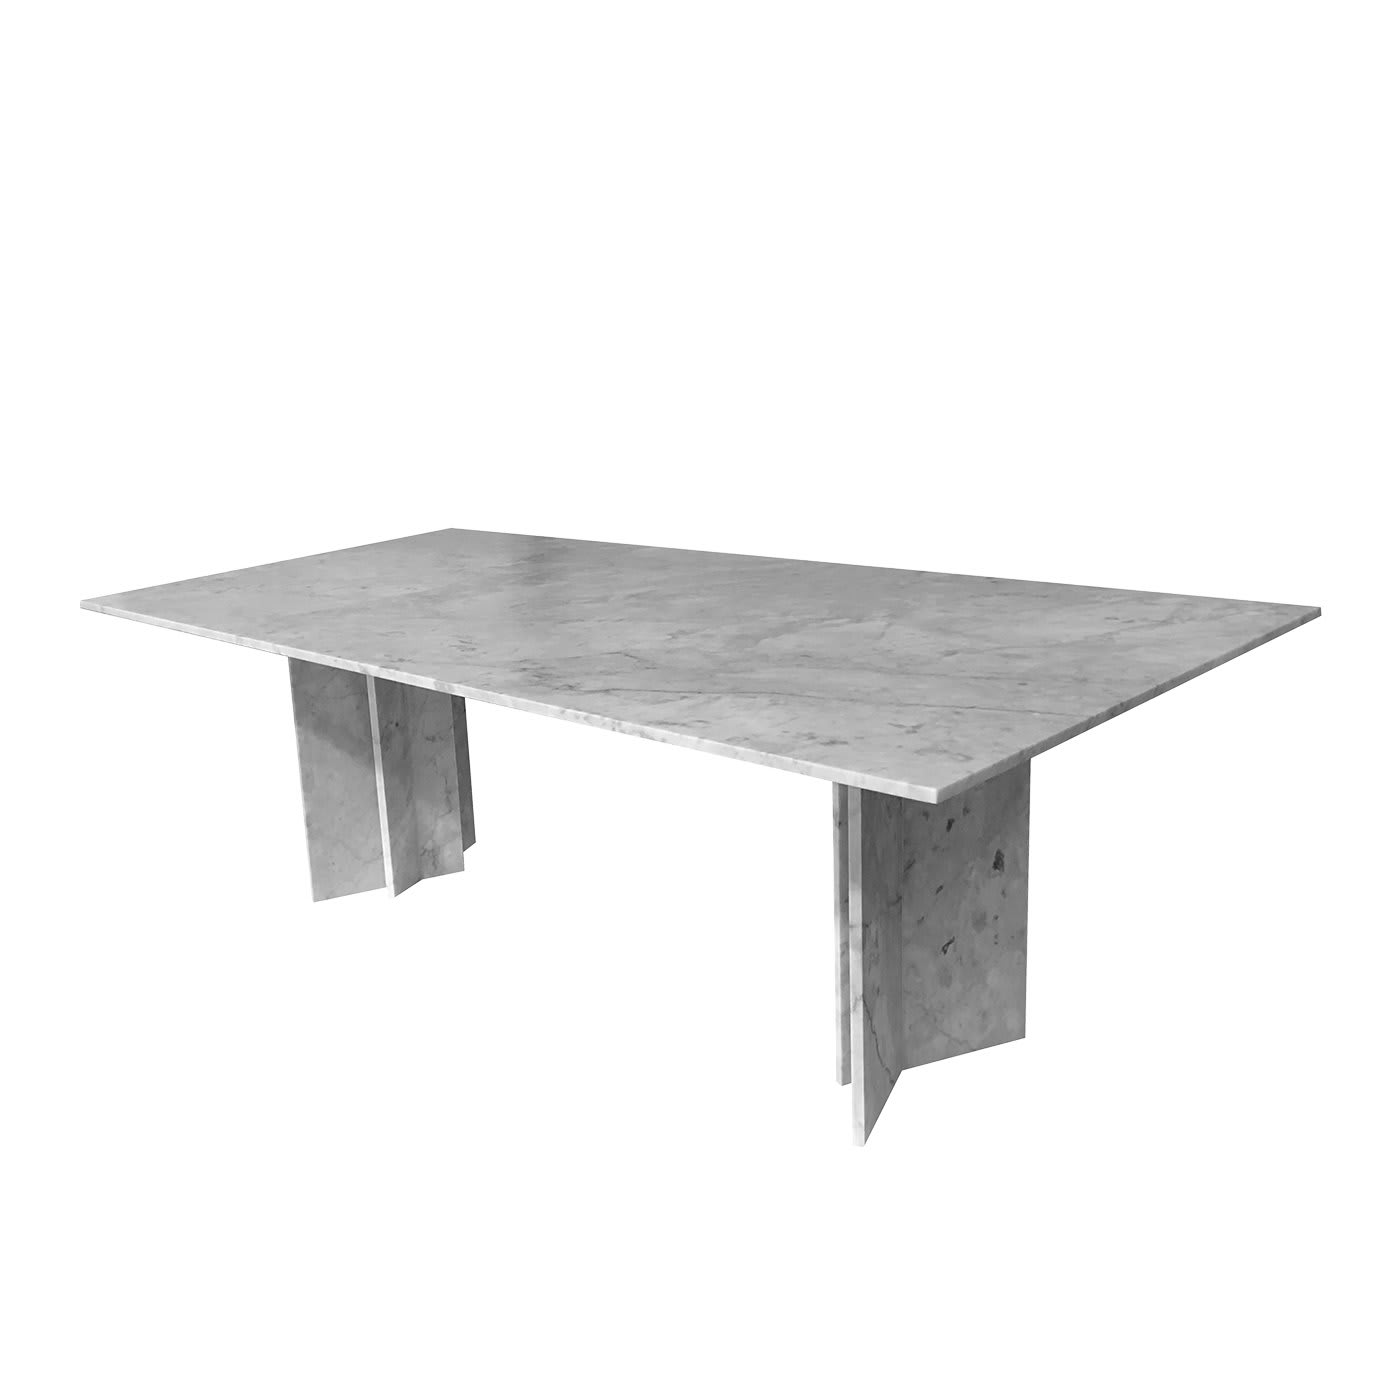 Rectangular Terry Table in White Marble - Giosuè Giaquinto